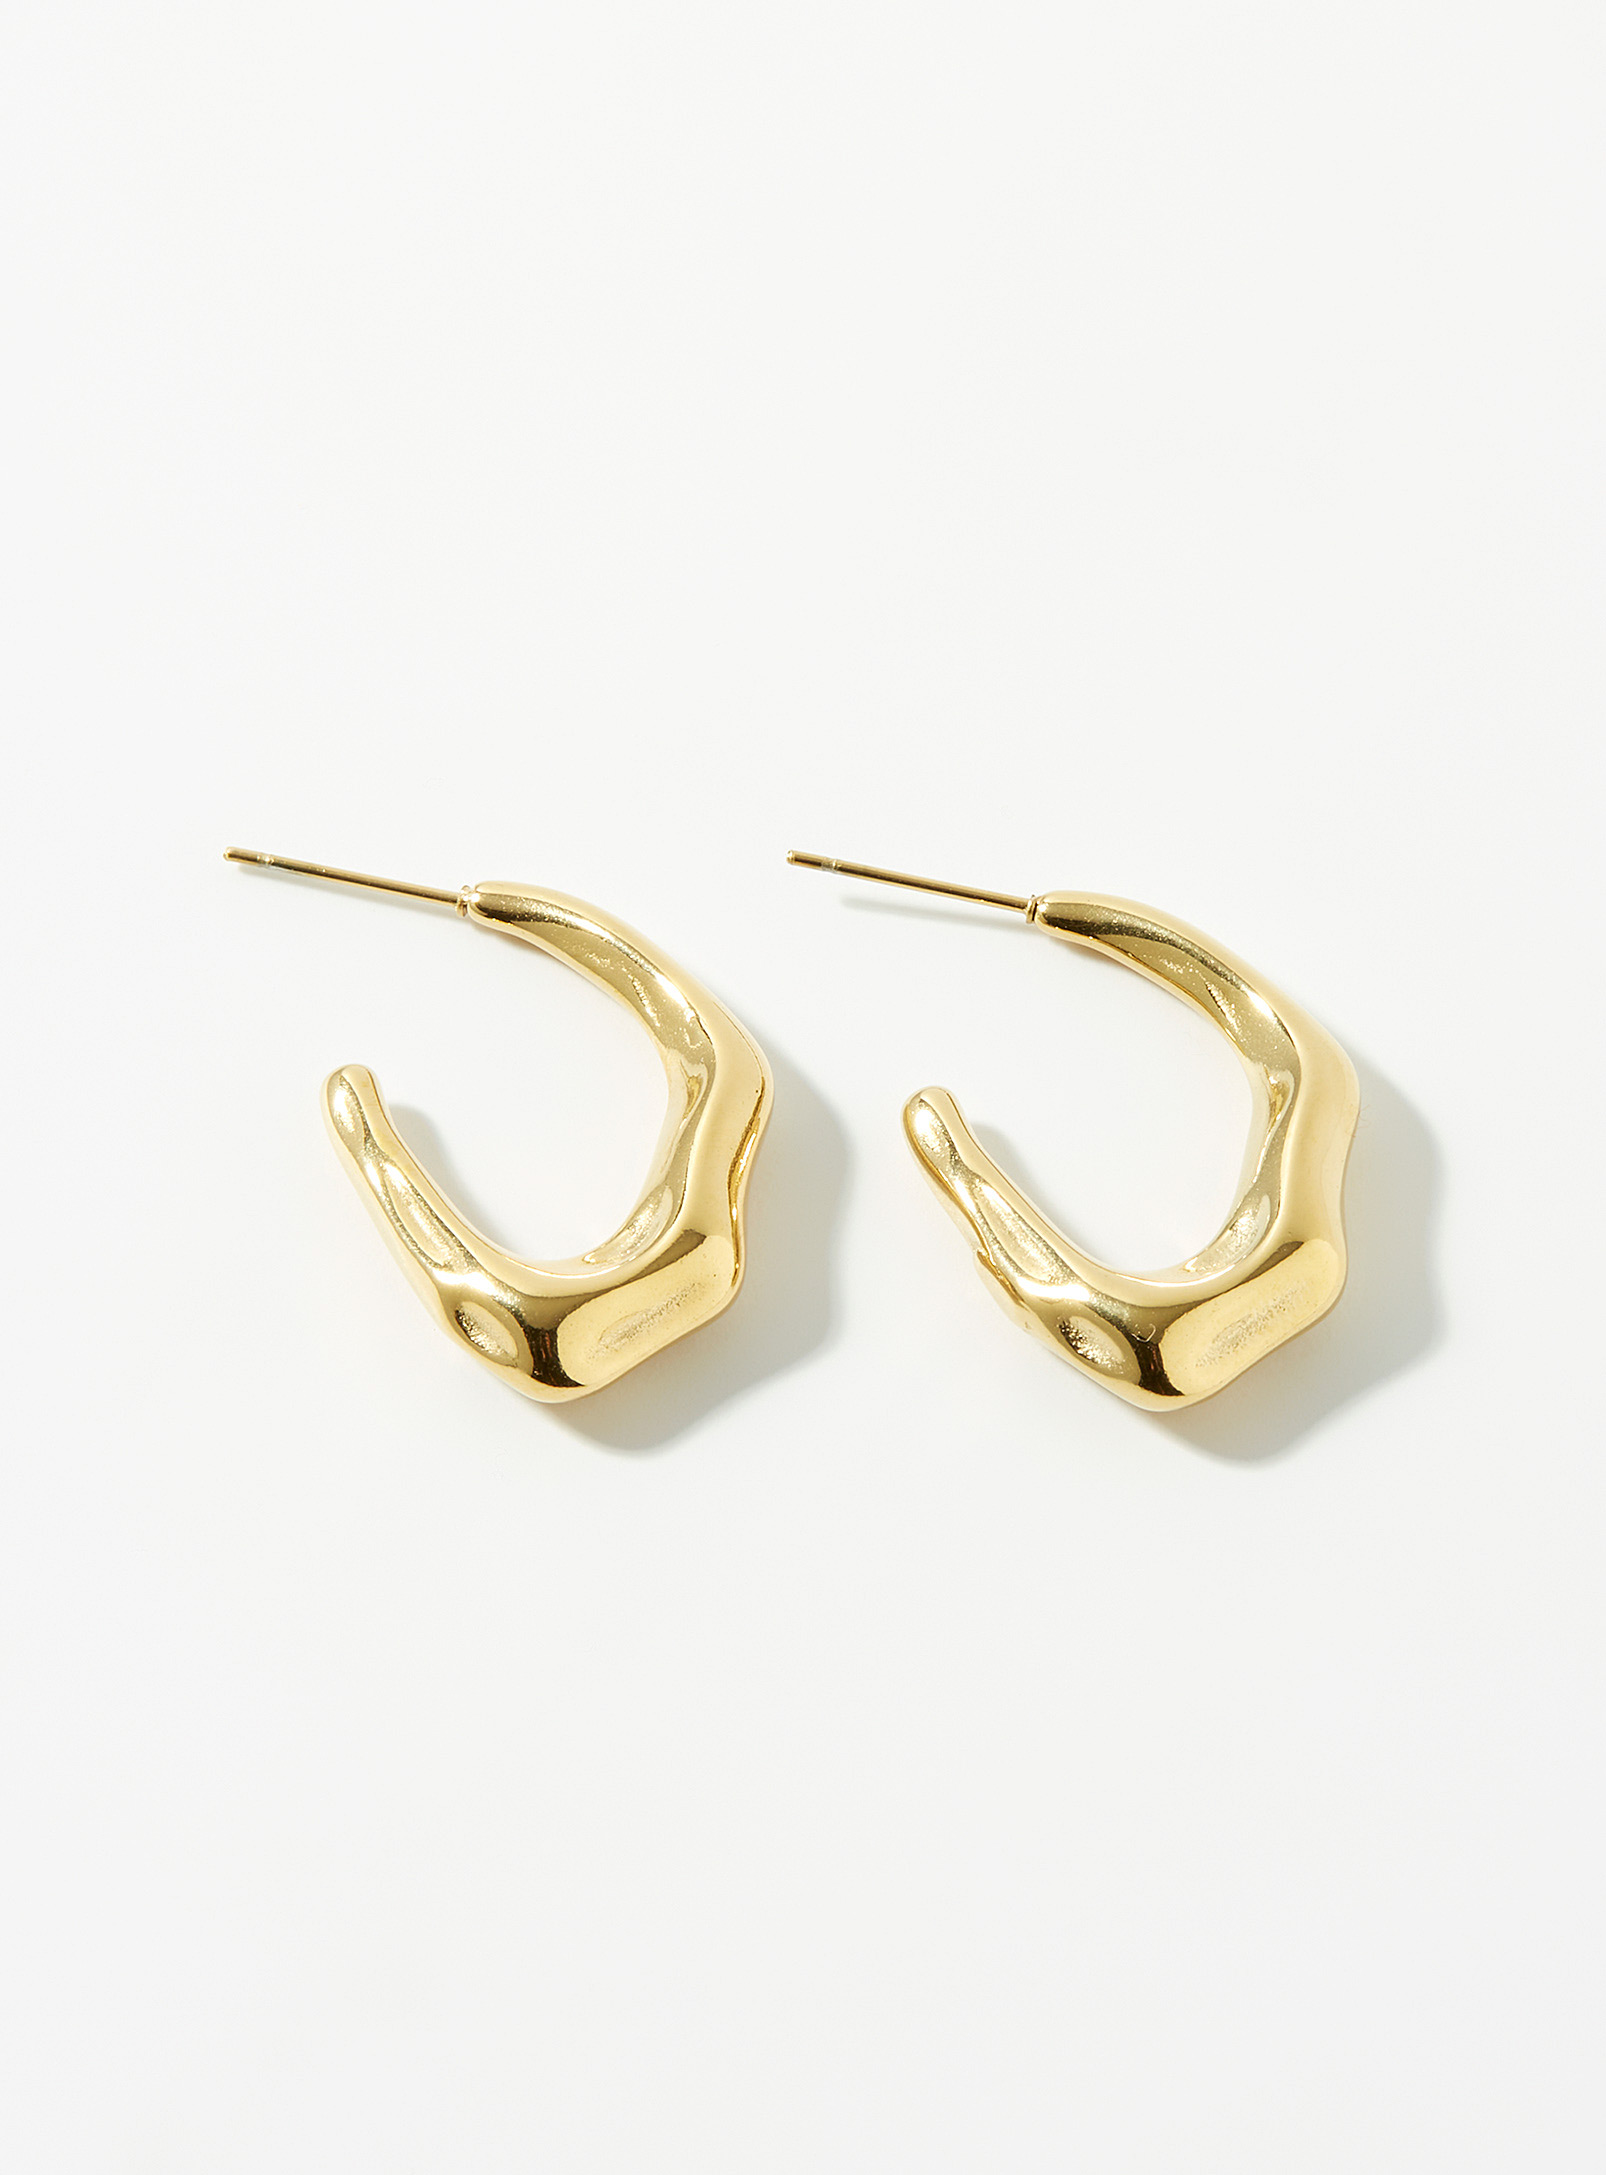 Simons - Women's Sinuous golden Hoop Earrings